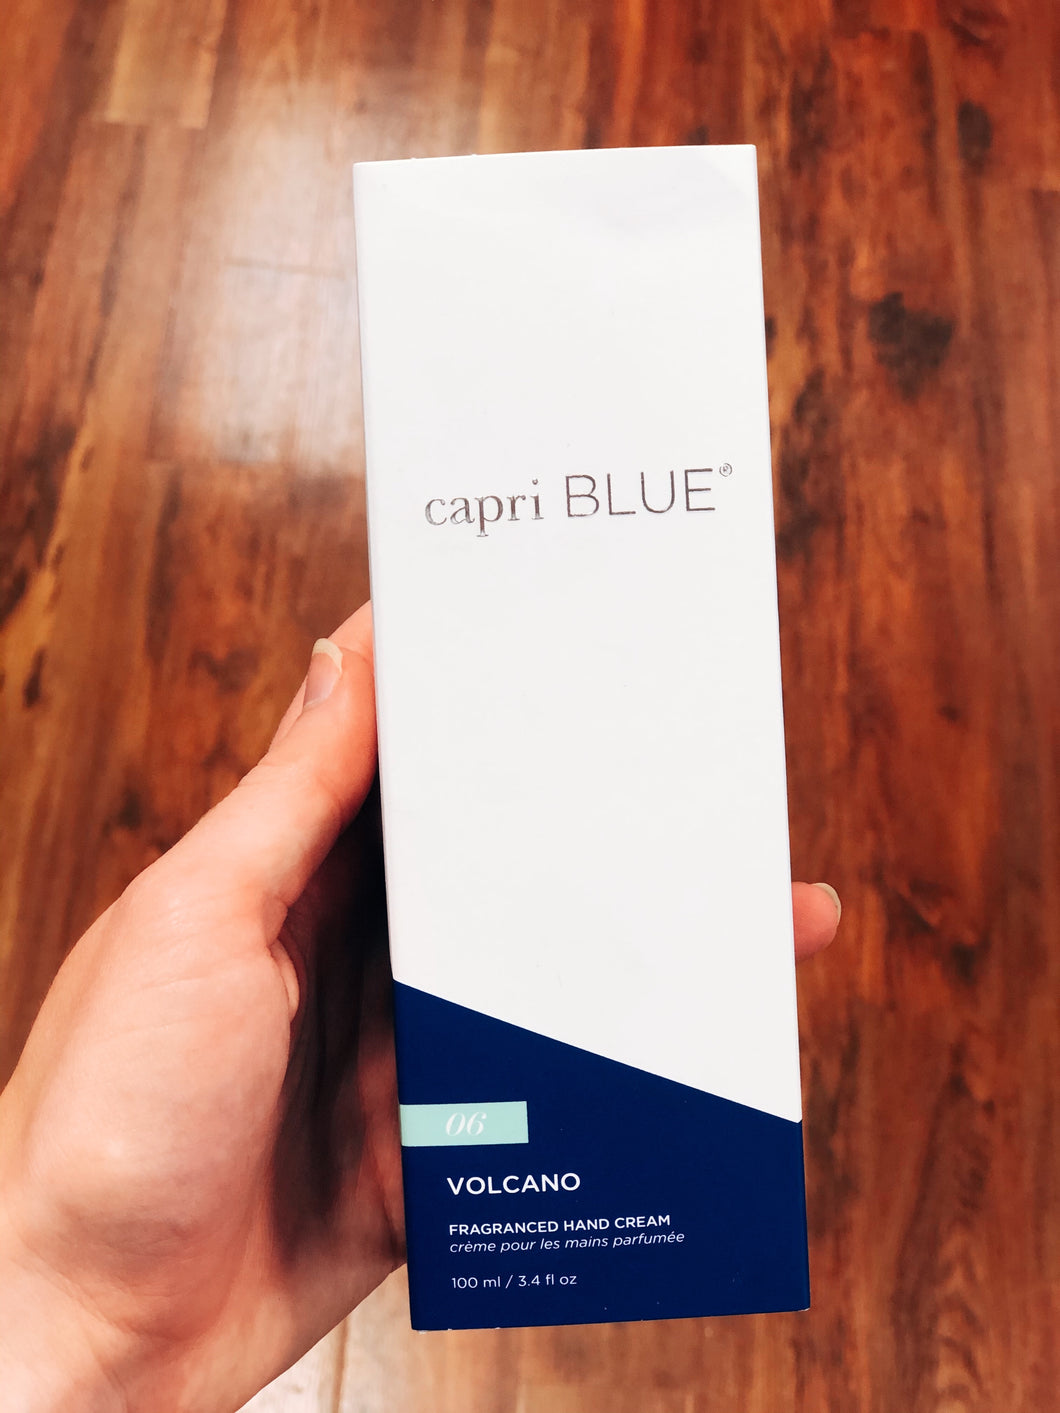 Capri Blue Hand Cream—Volcano